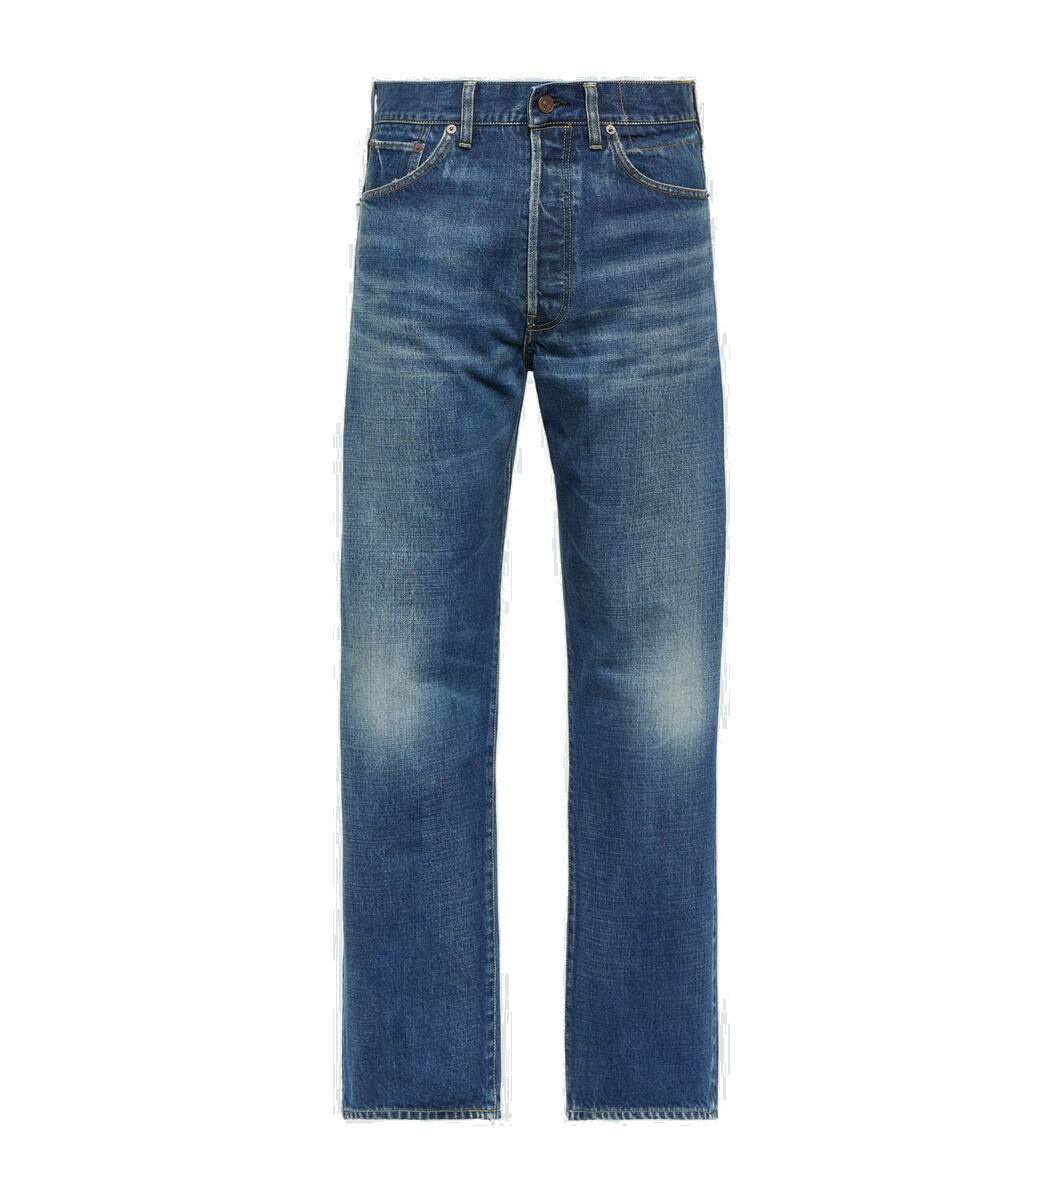 visvim - Social Sculpture 12D19 Skinny-Fit Distressed Denim Jeans 